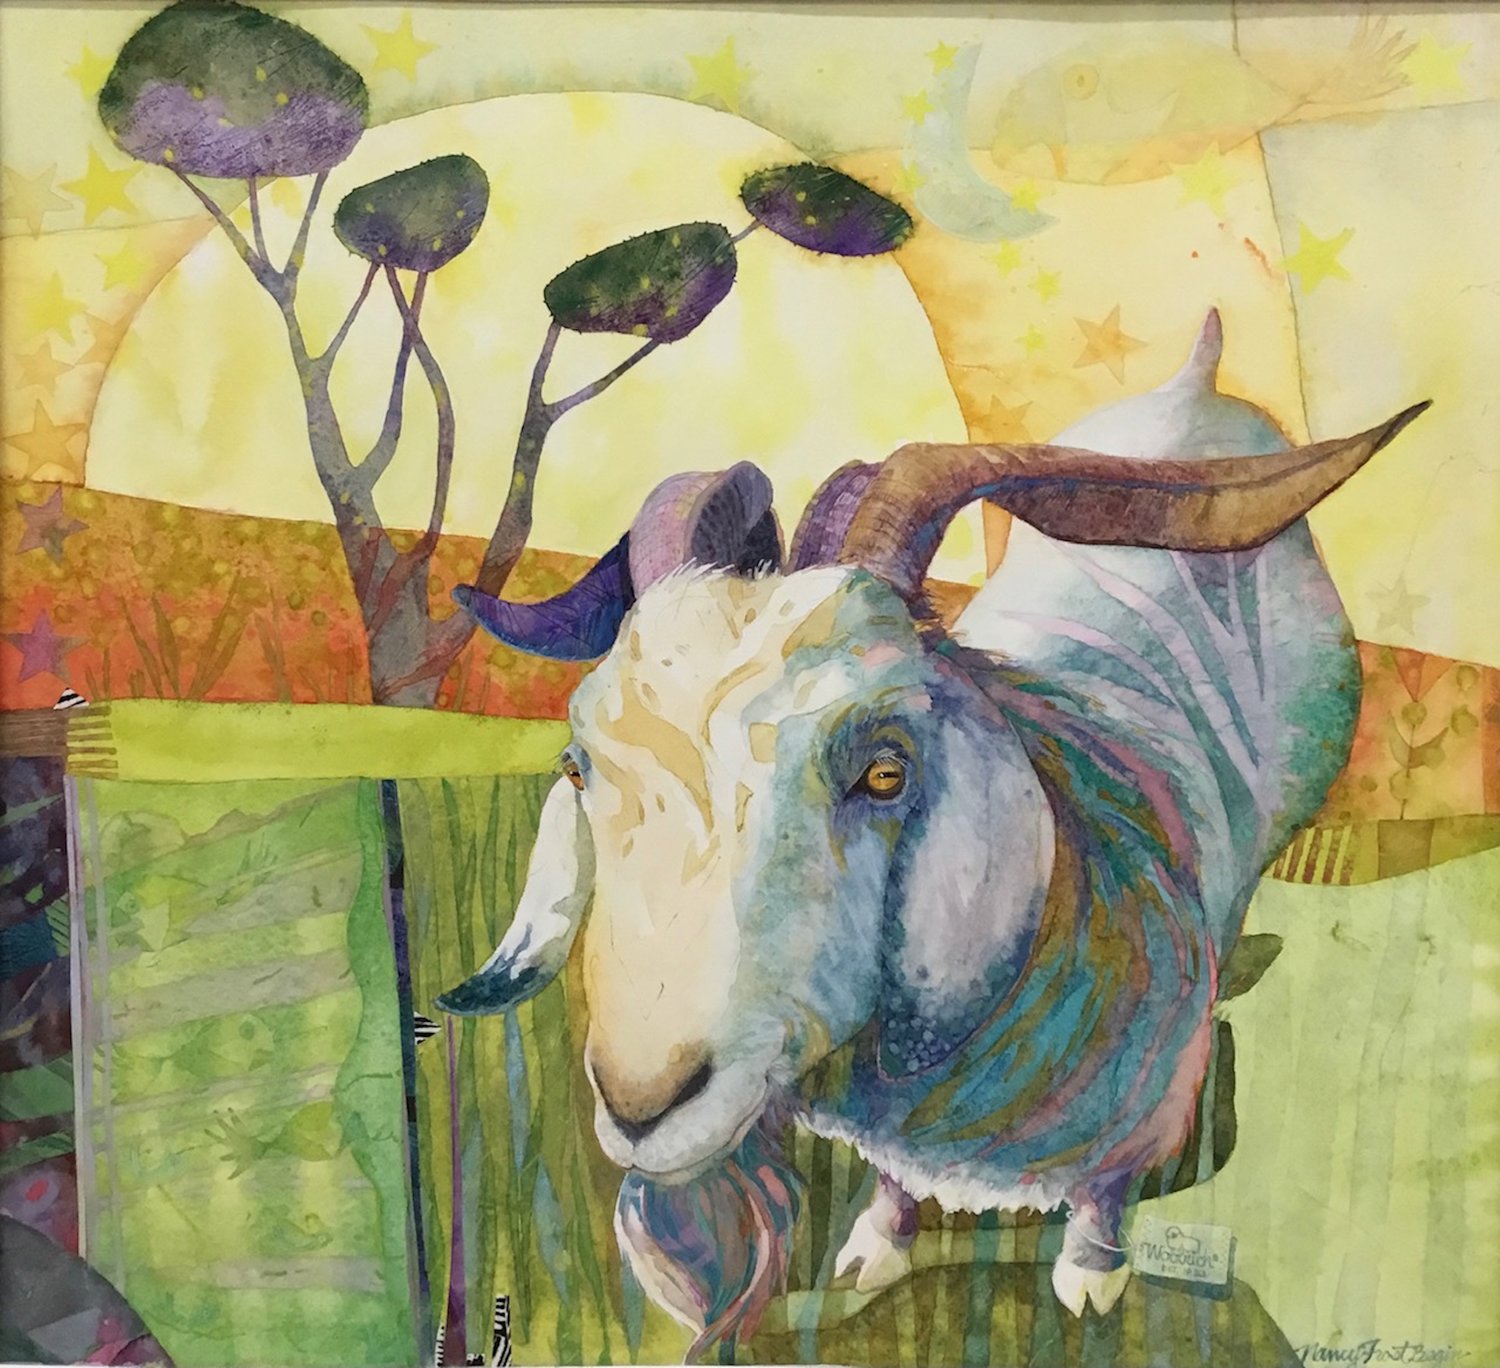 “The Farm Fantasy of Mr. Goat” by Nancy Begin